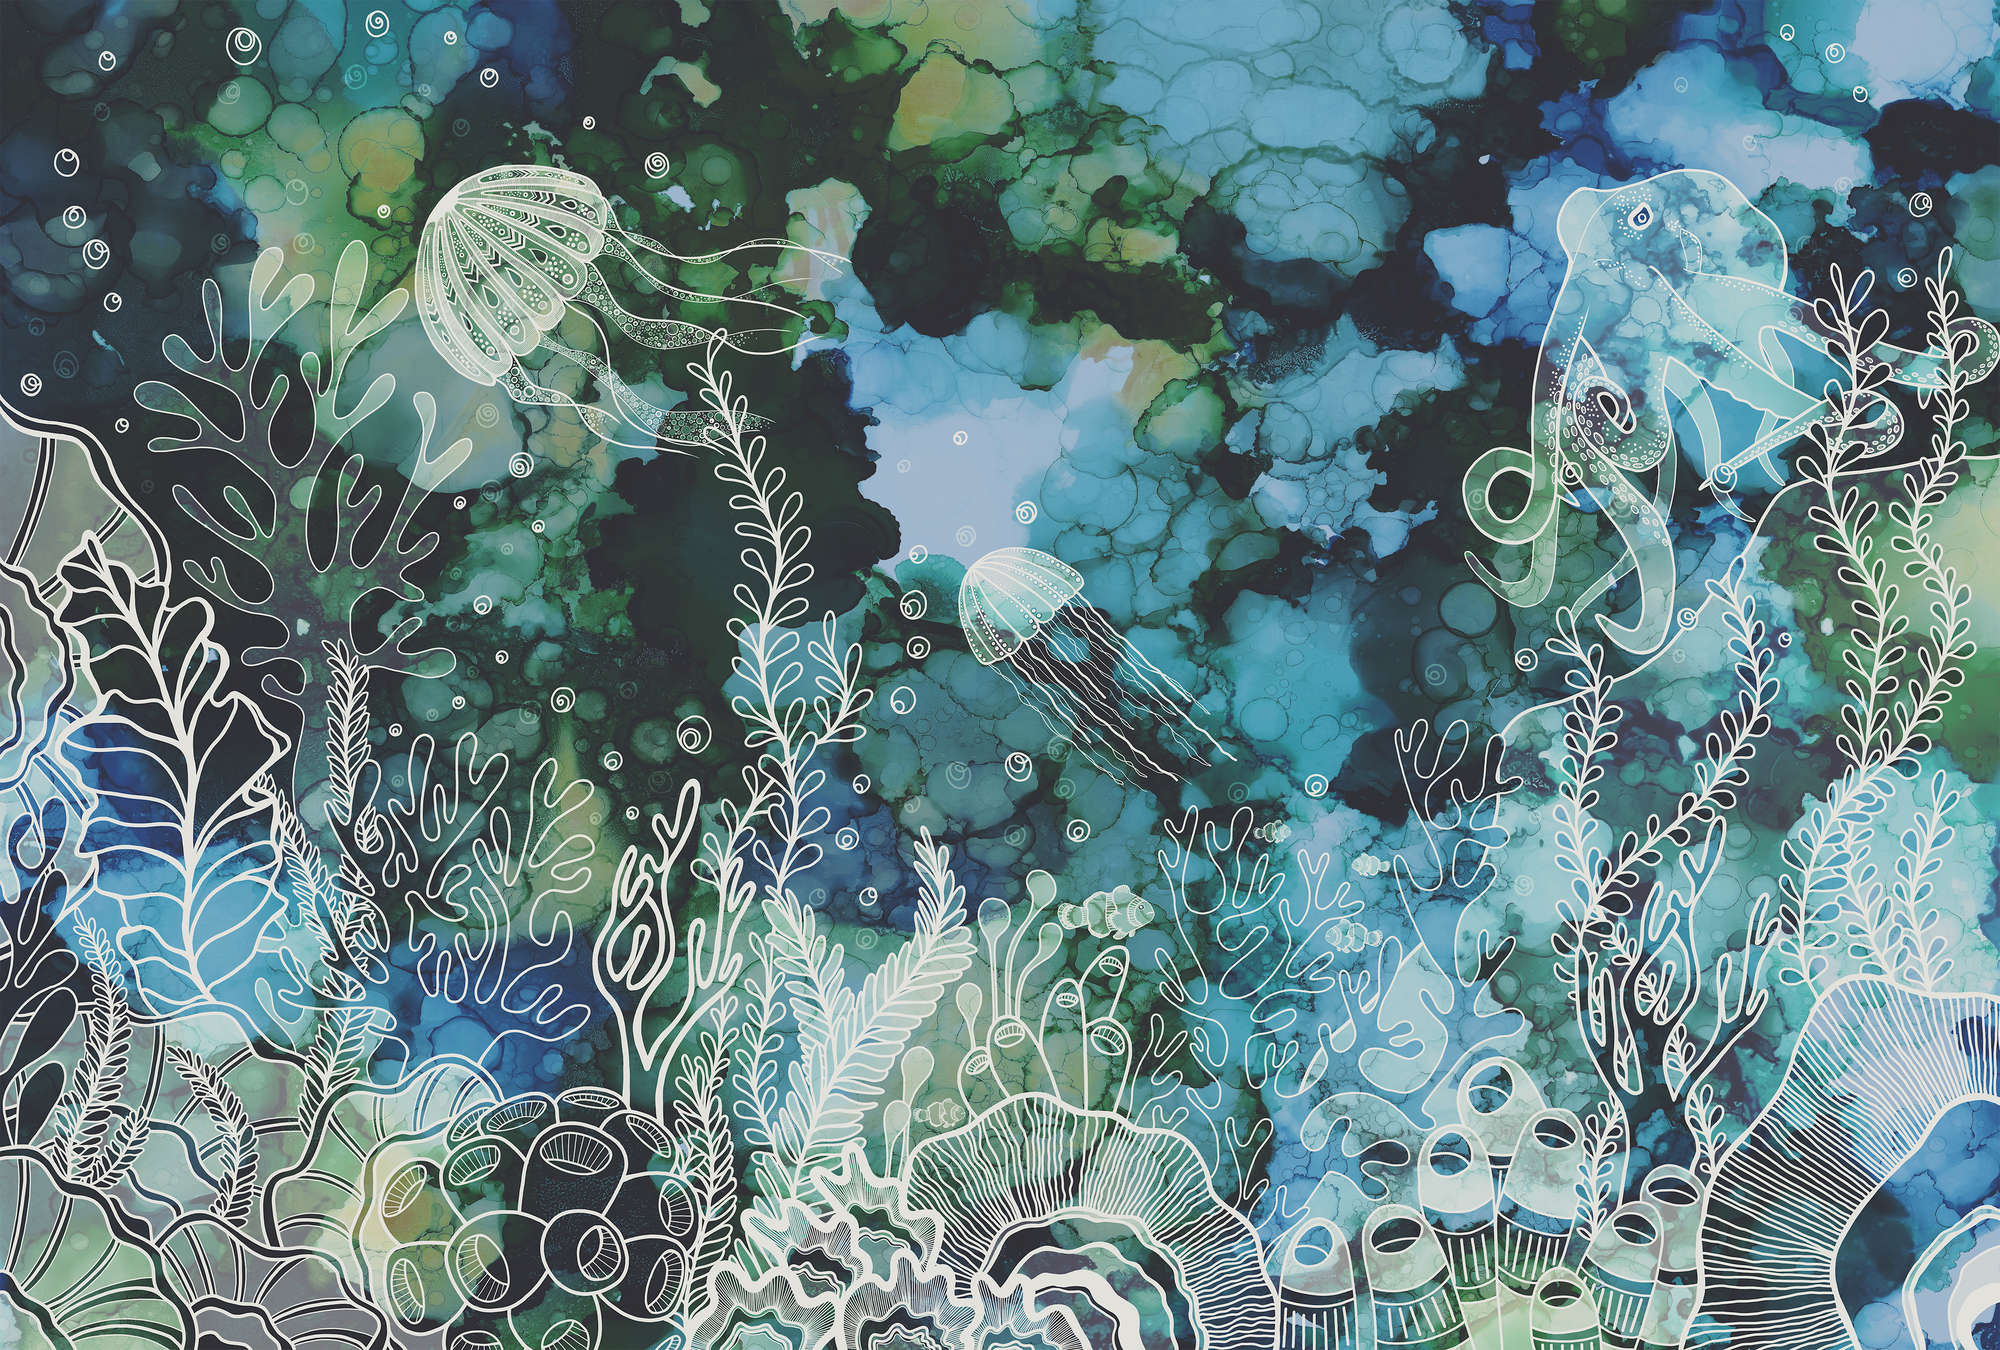             Muurschildering met onderwater koraalrif in acrylverf
        